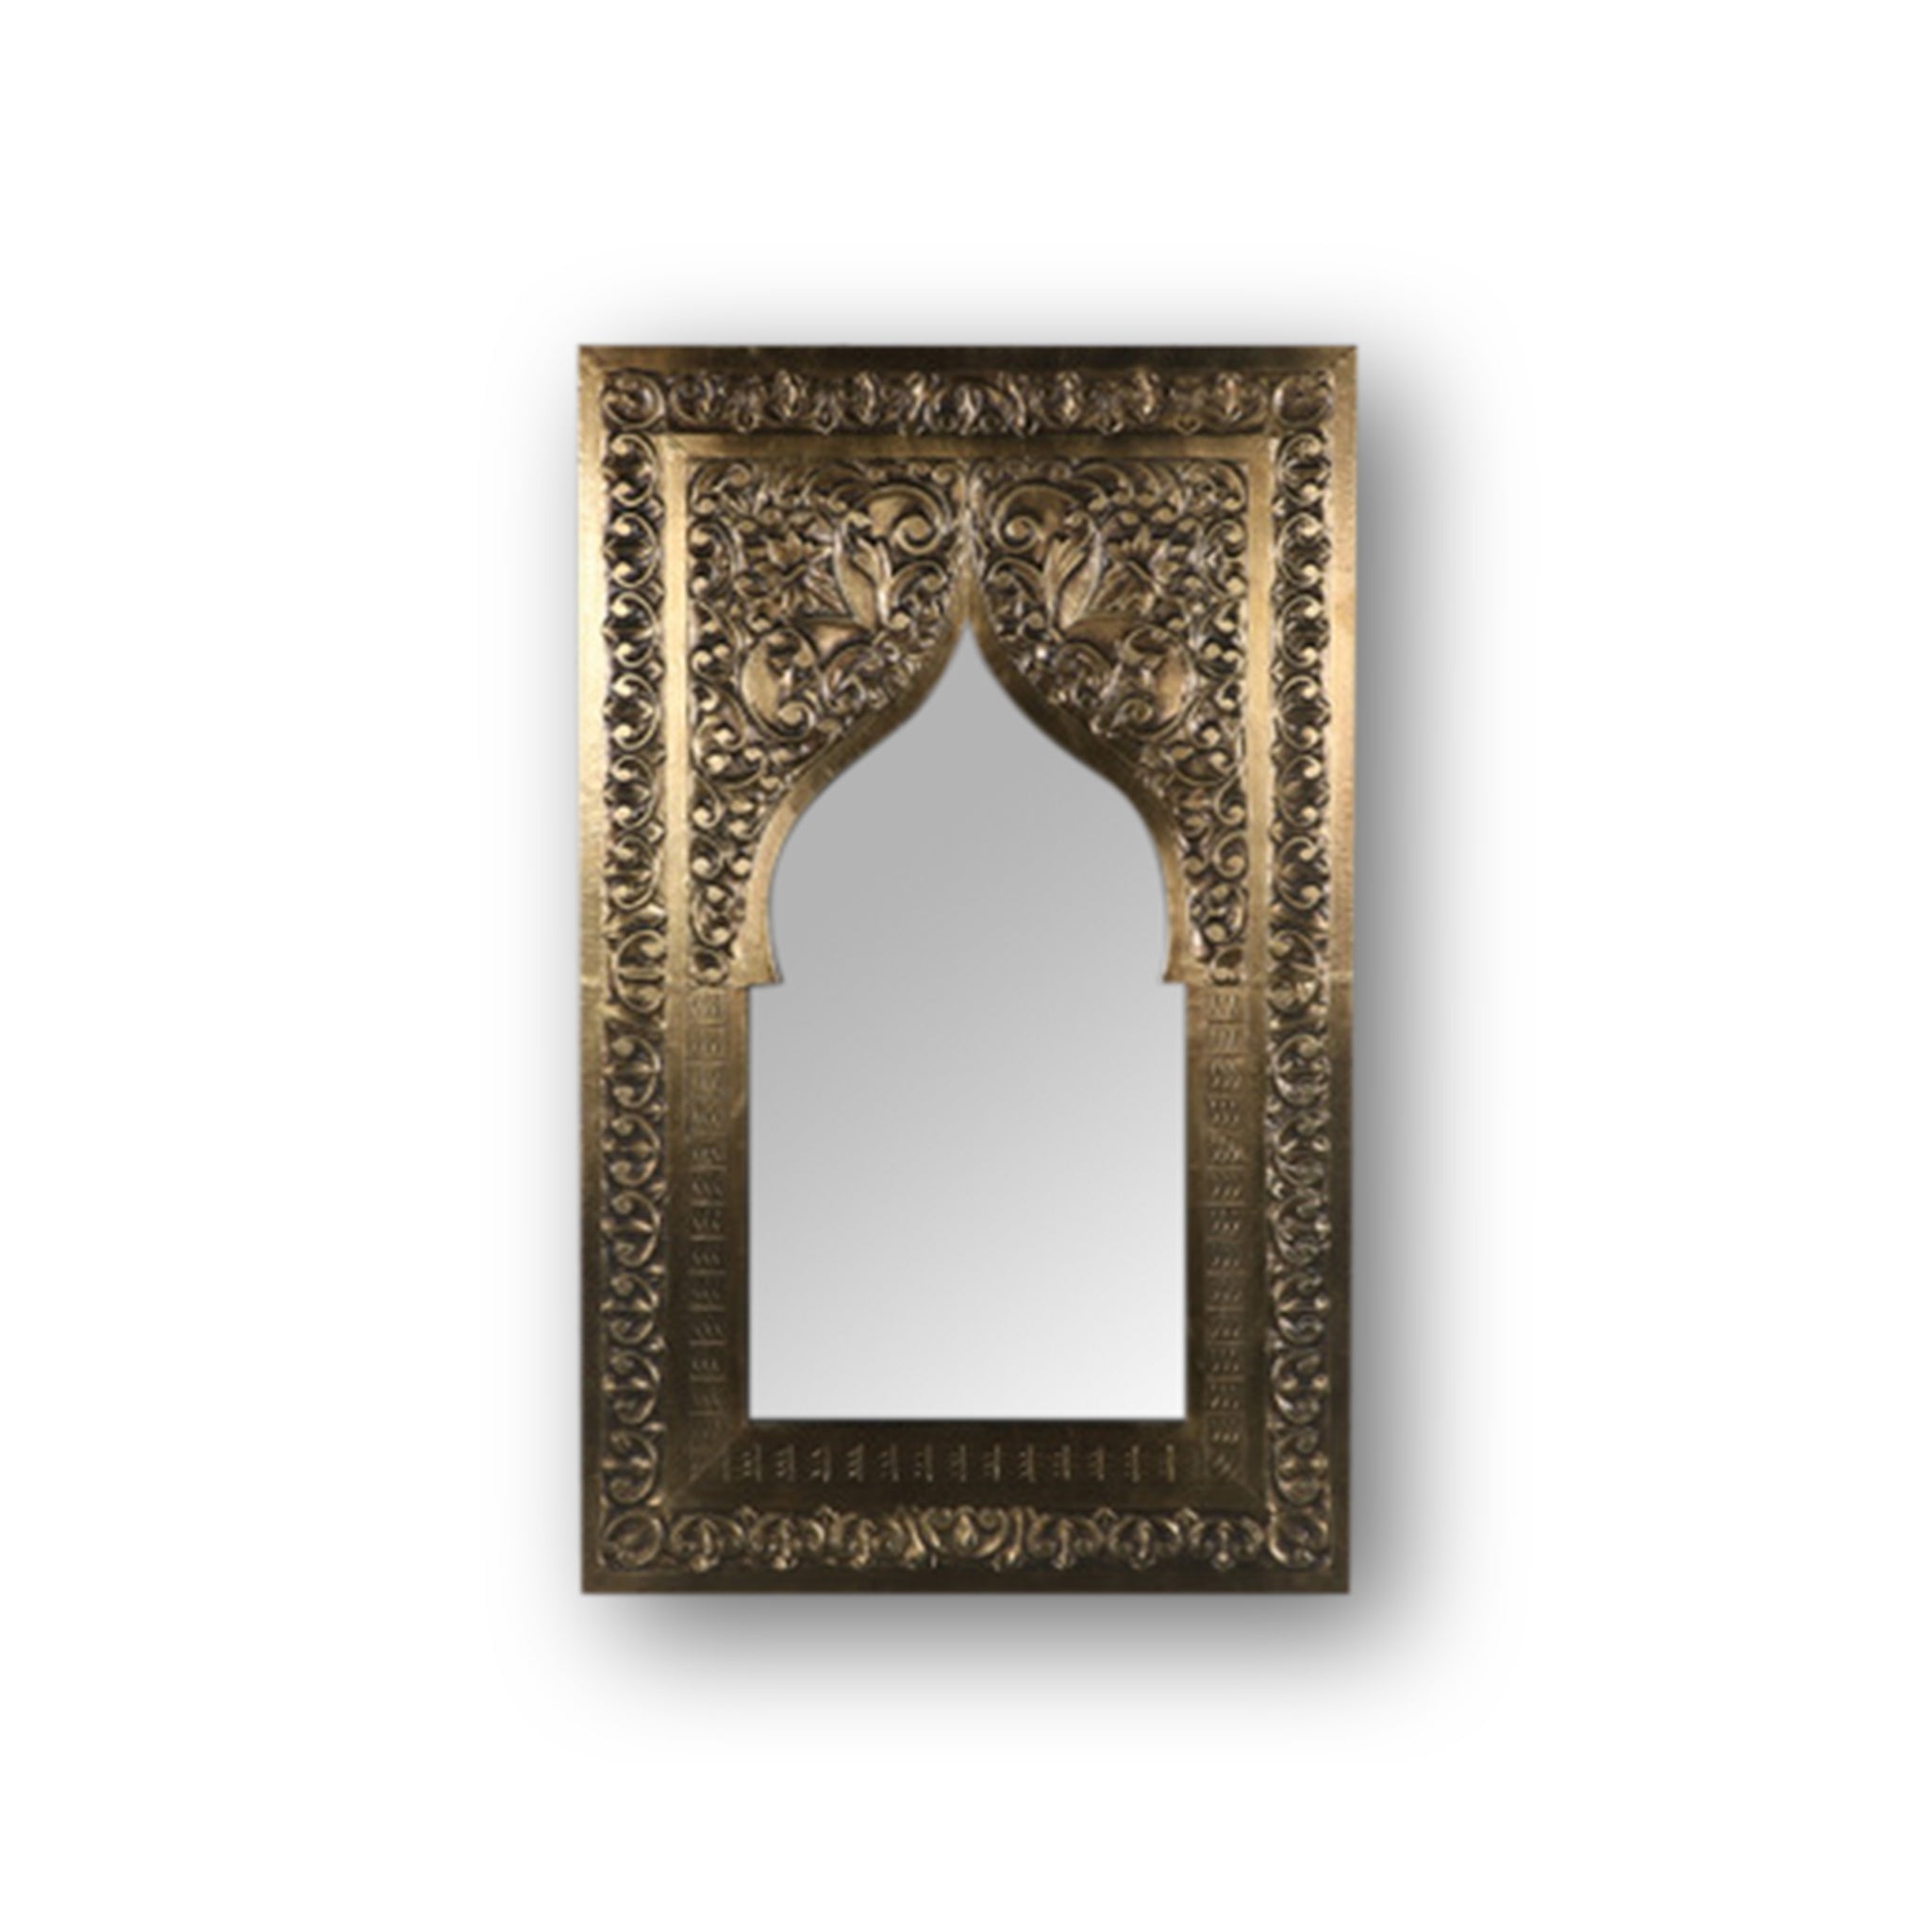 Temple Ornate Wall Mirror